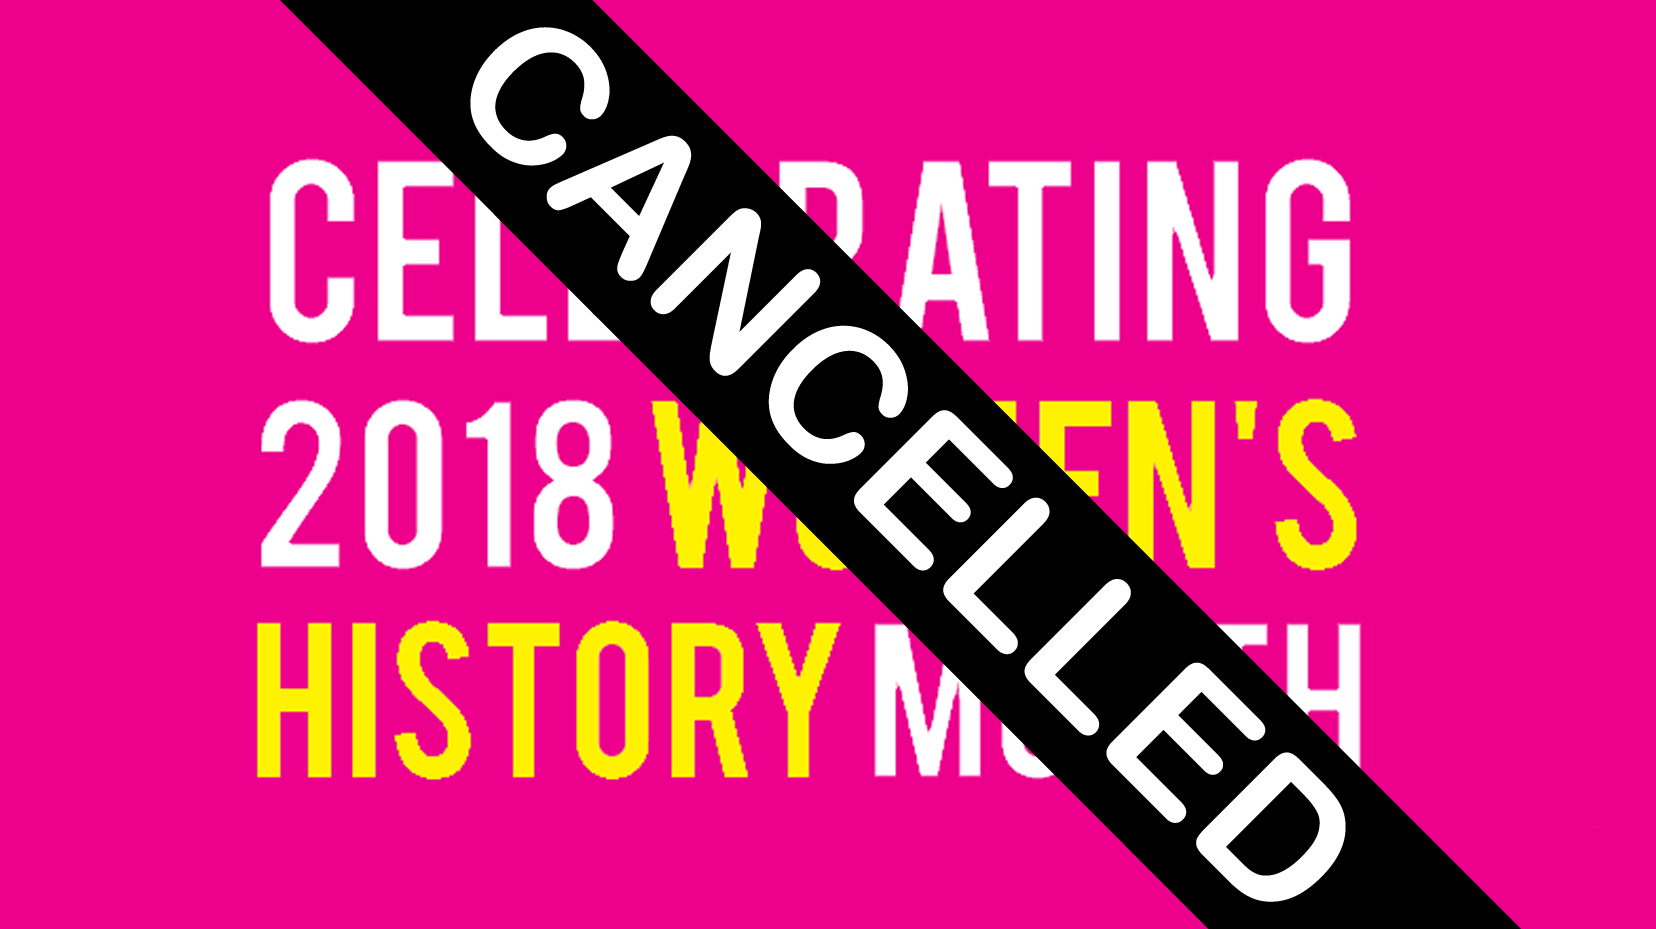 DSU is celebrating 2018 Women's History Month